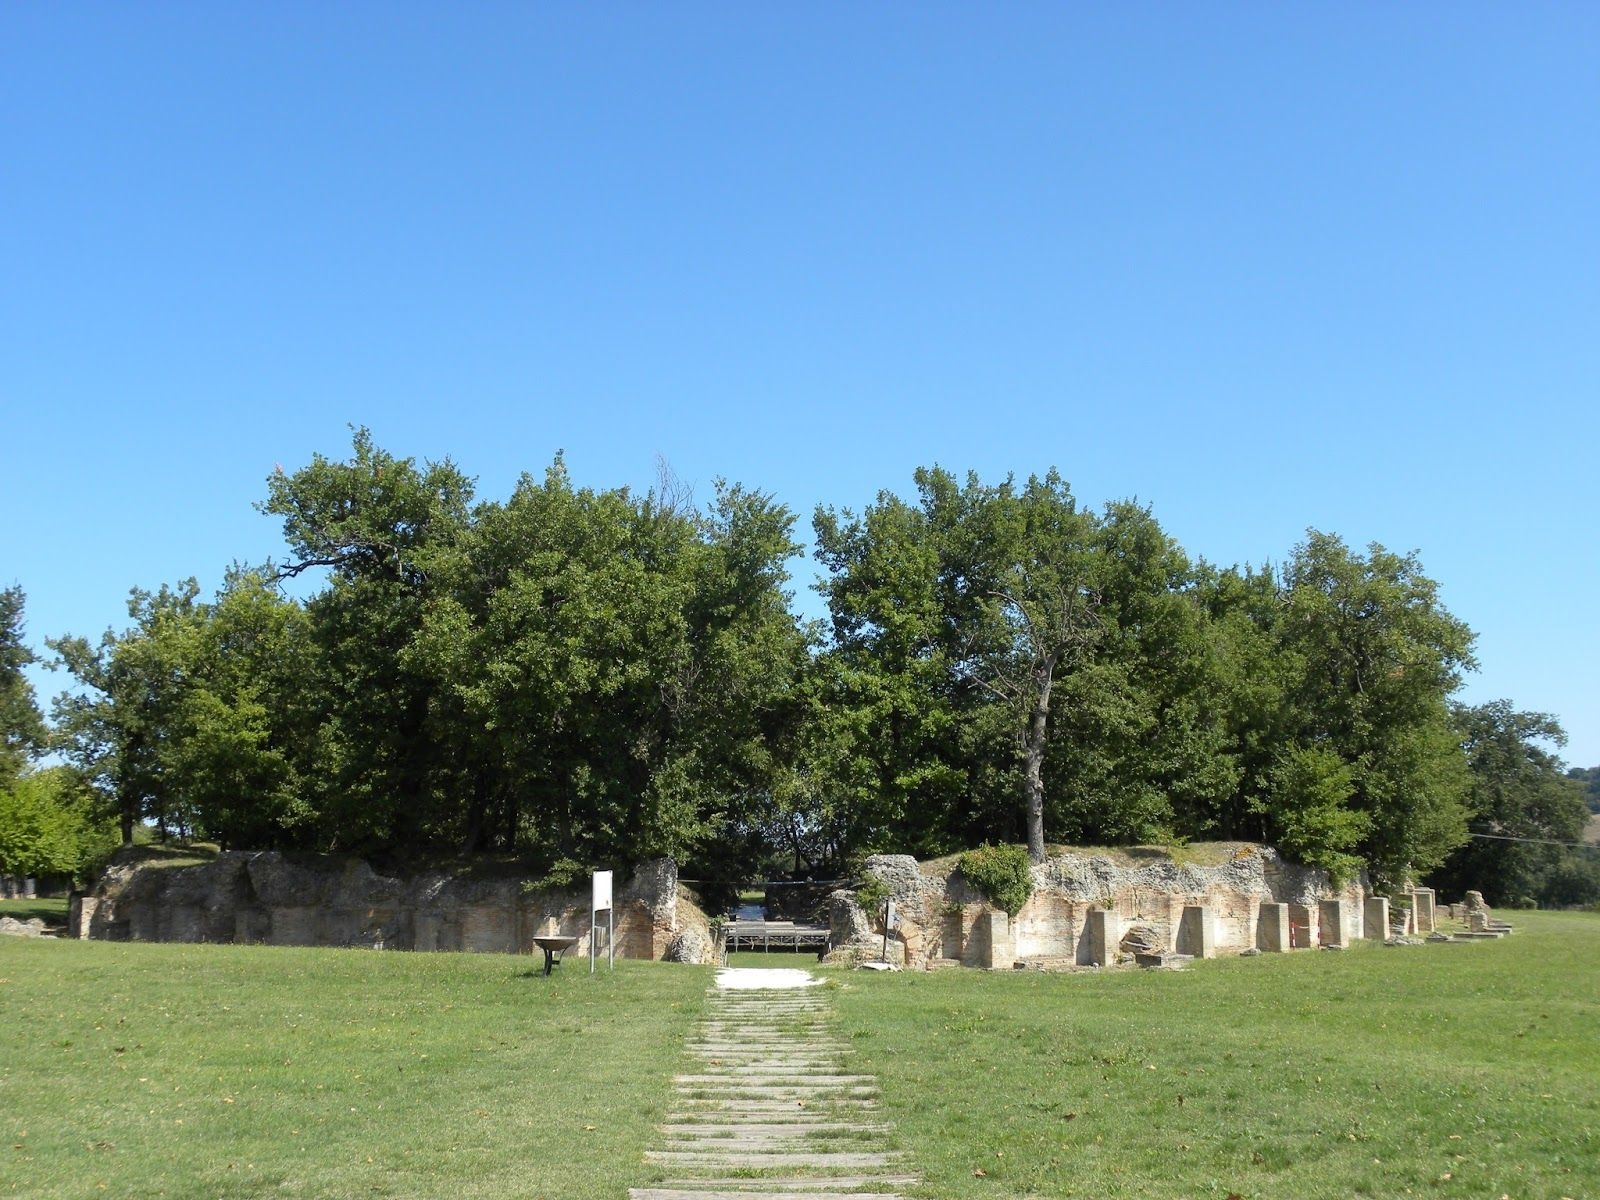 Archeological site of Urbs Salvia